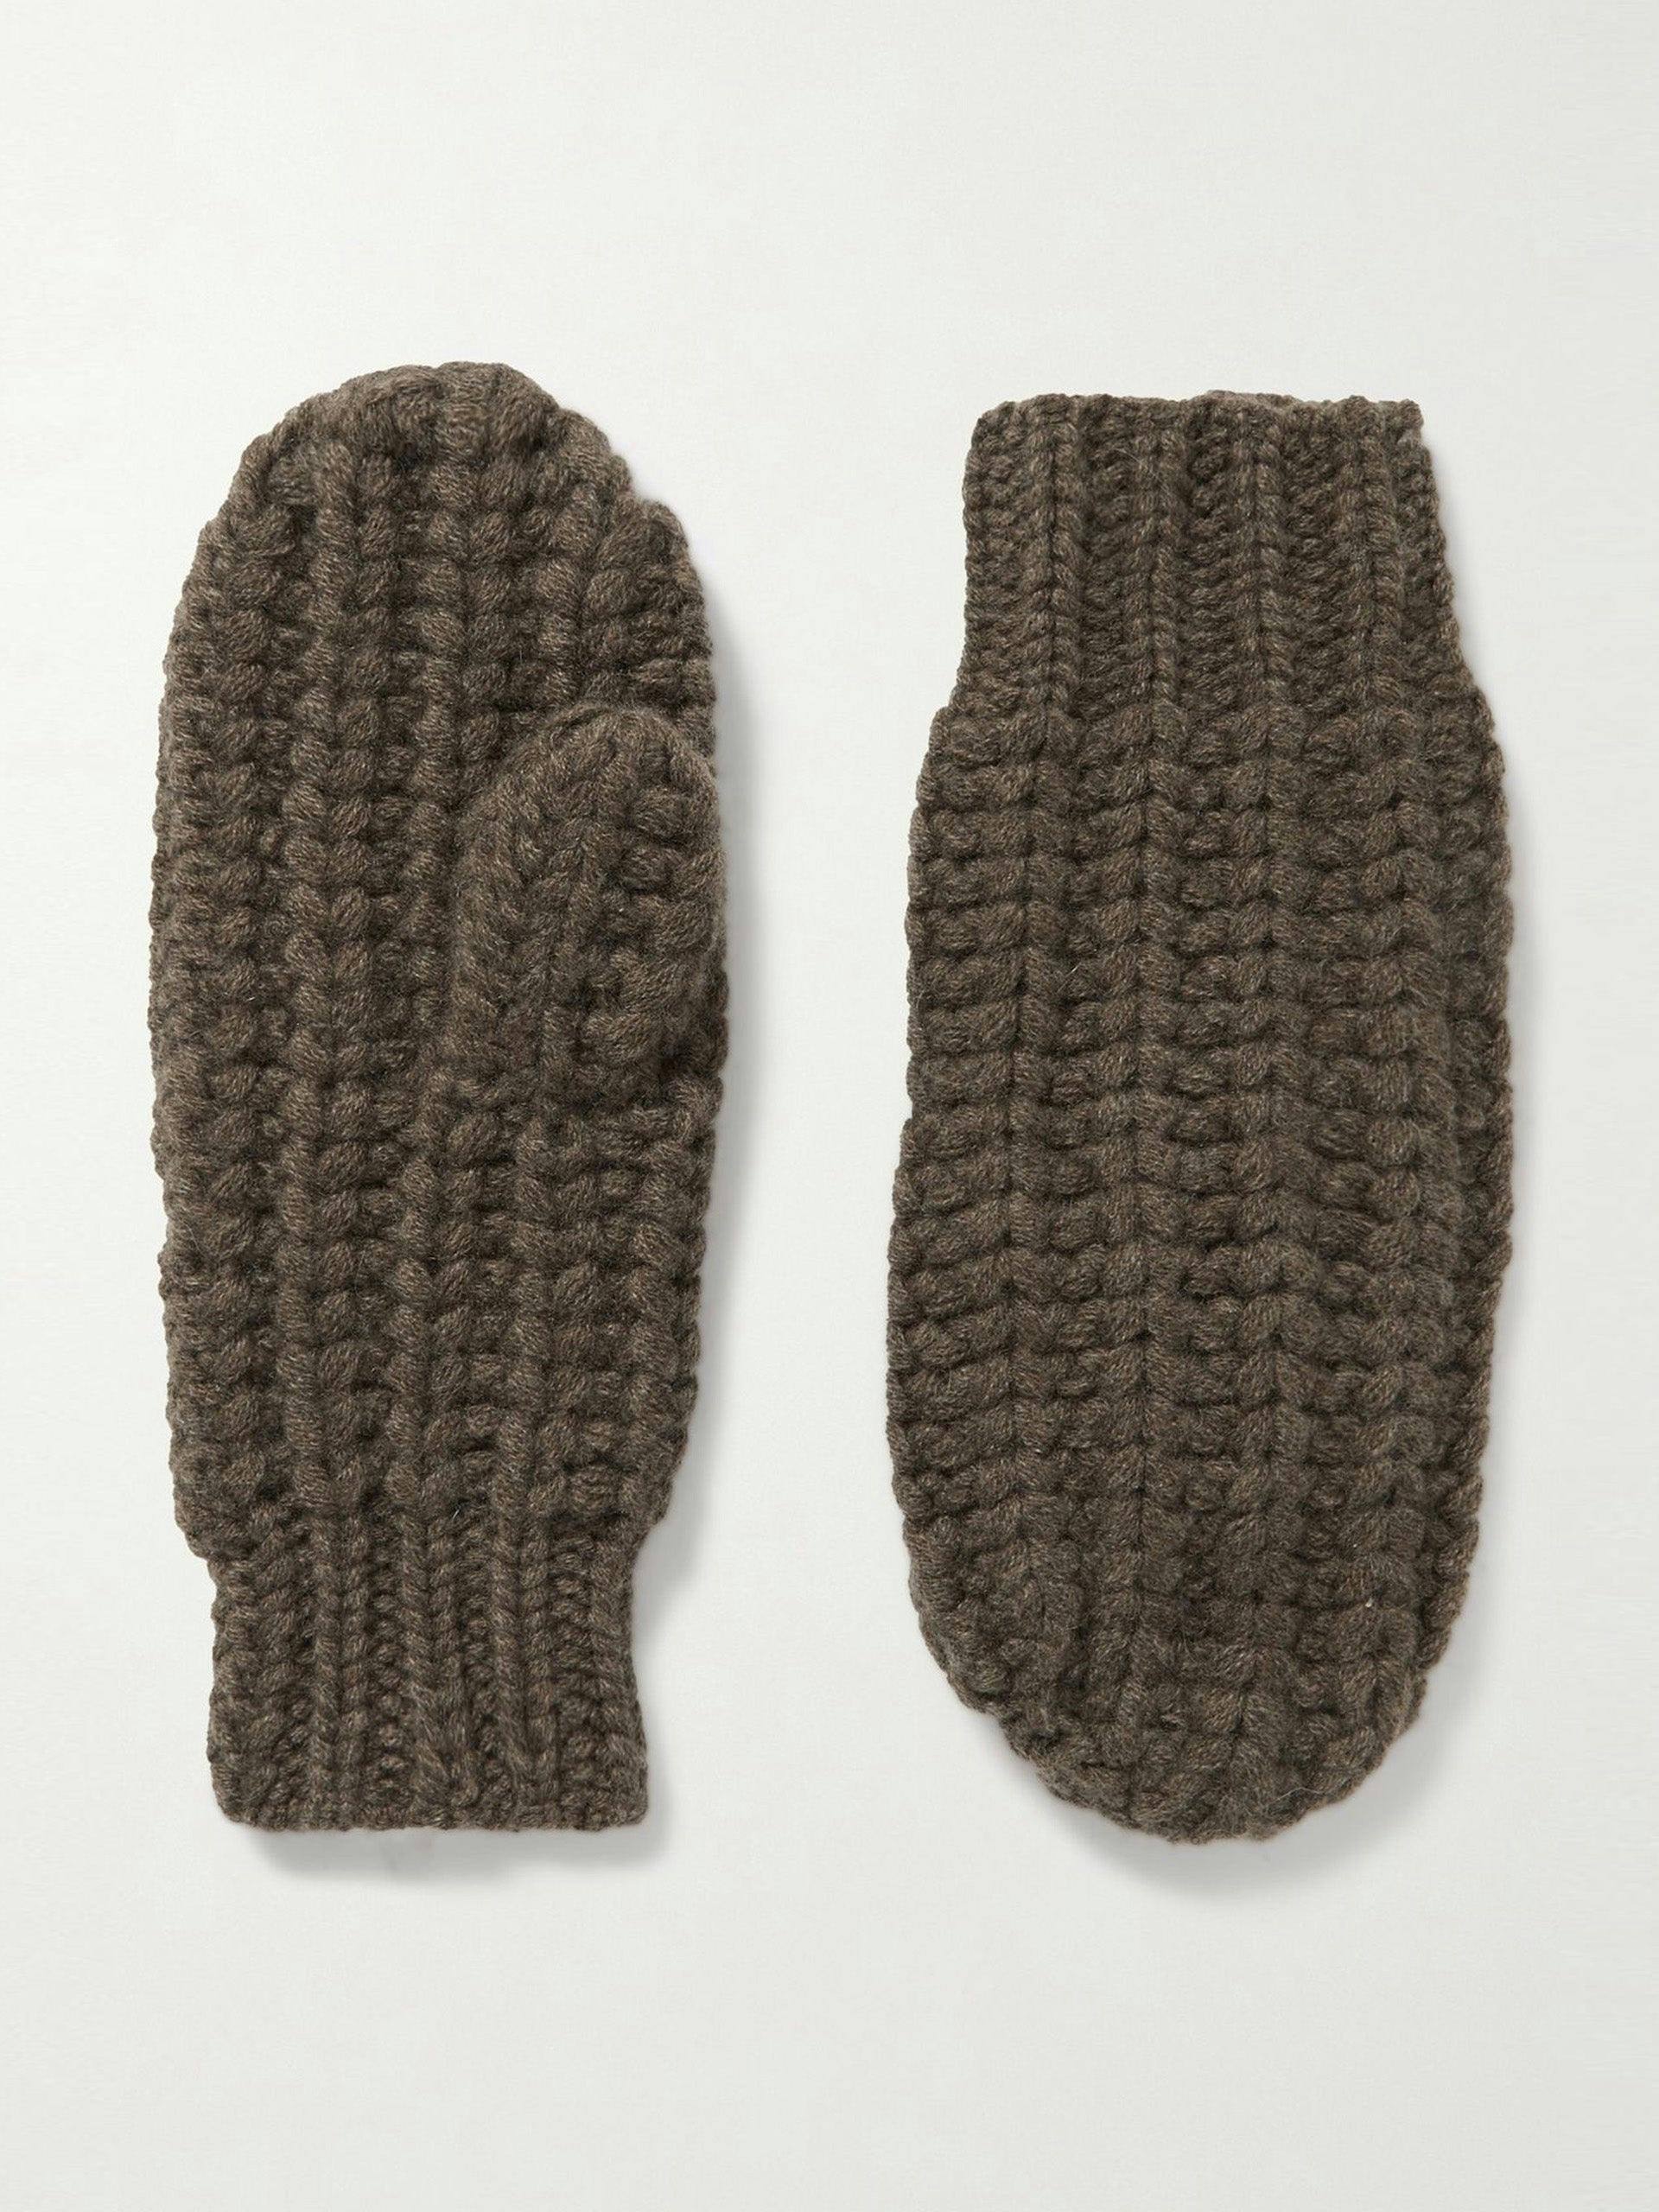 Vantaa ribbed cashmere mittens